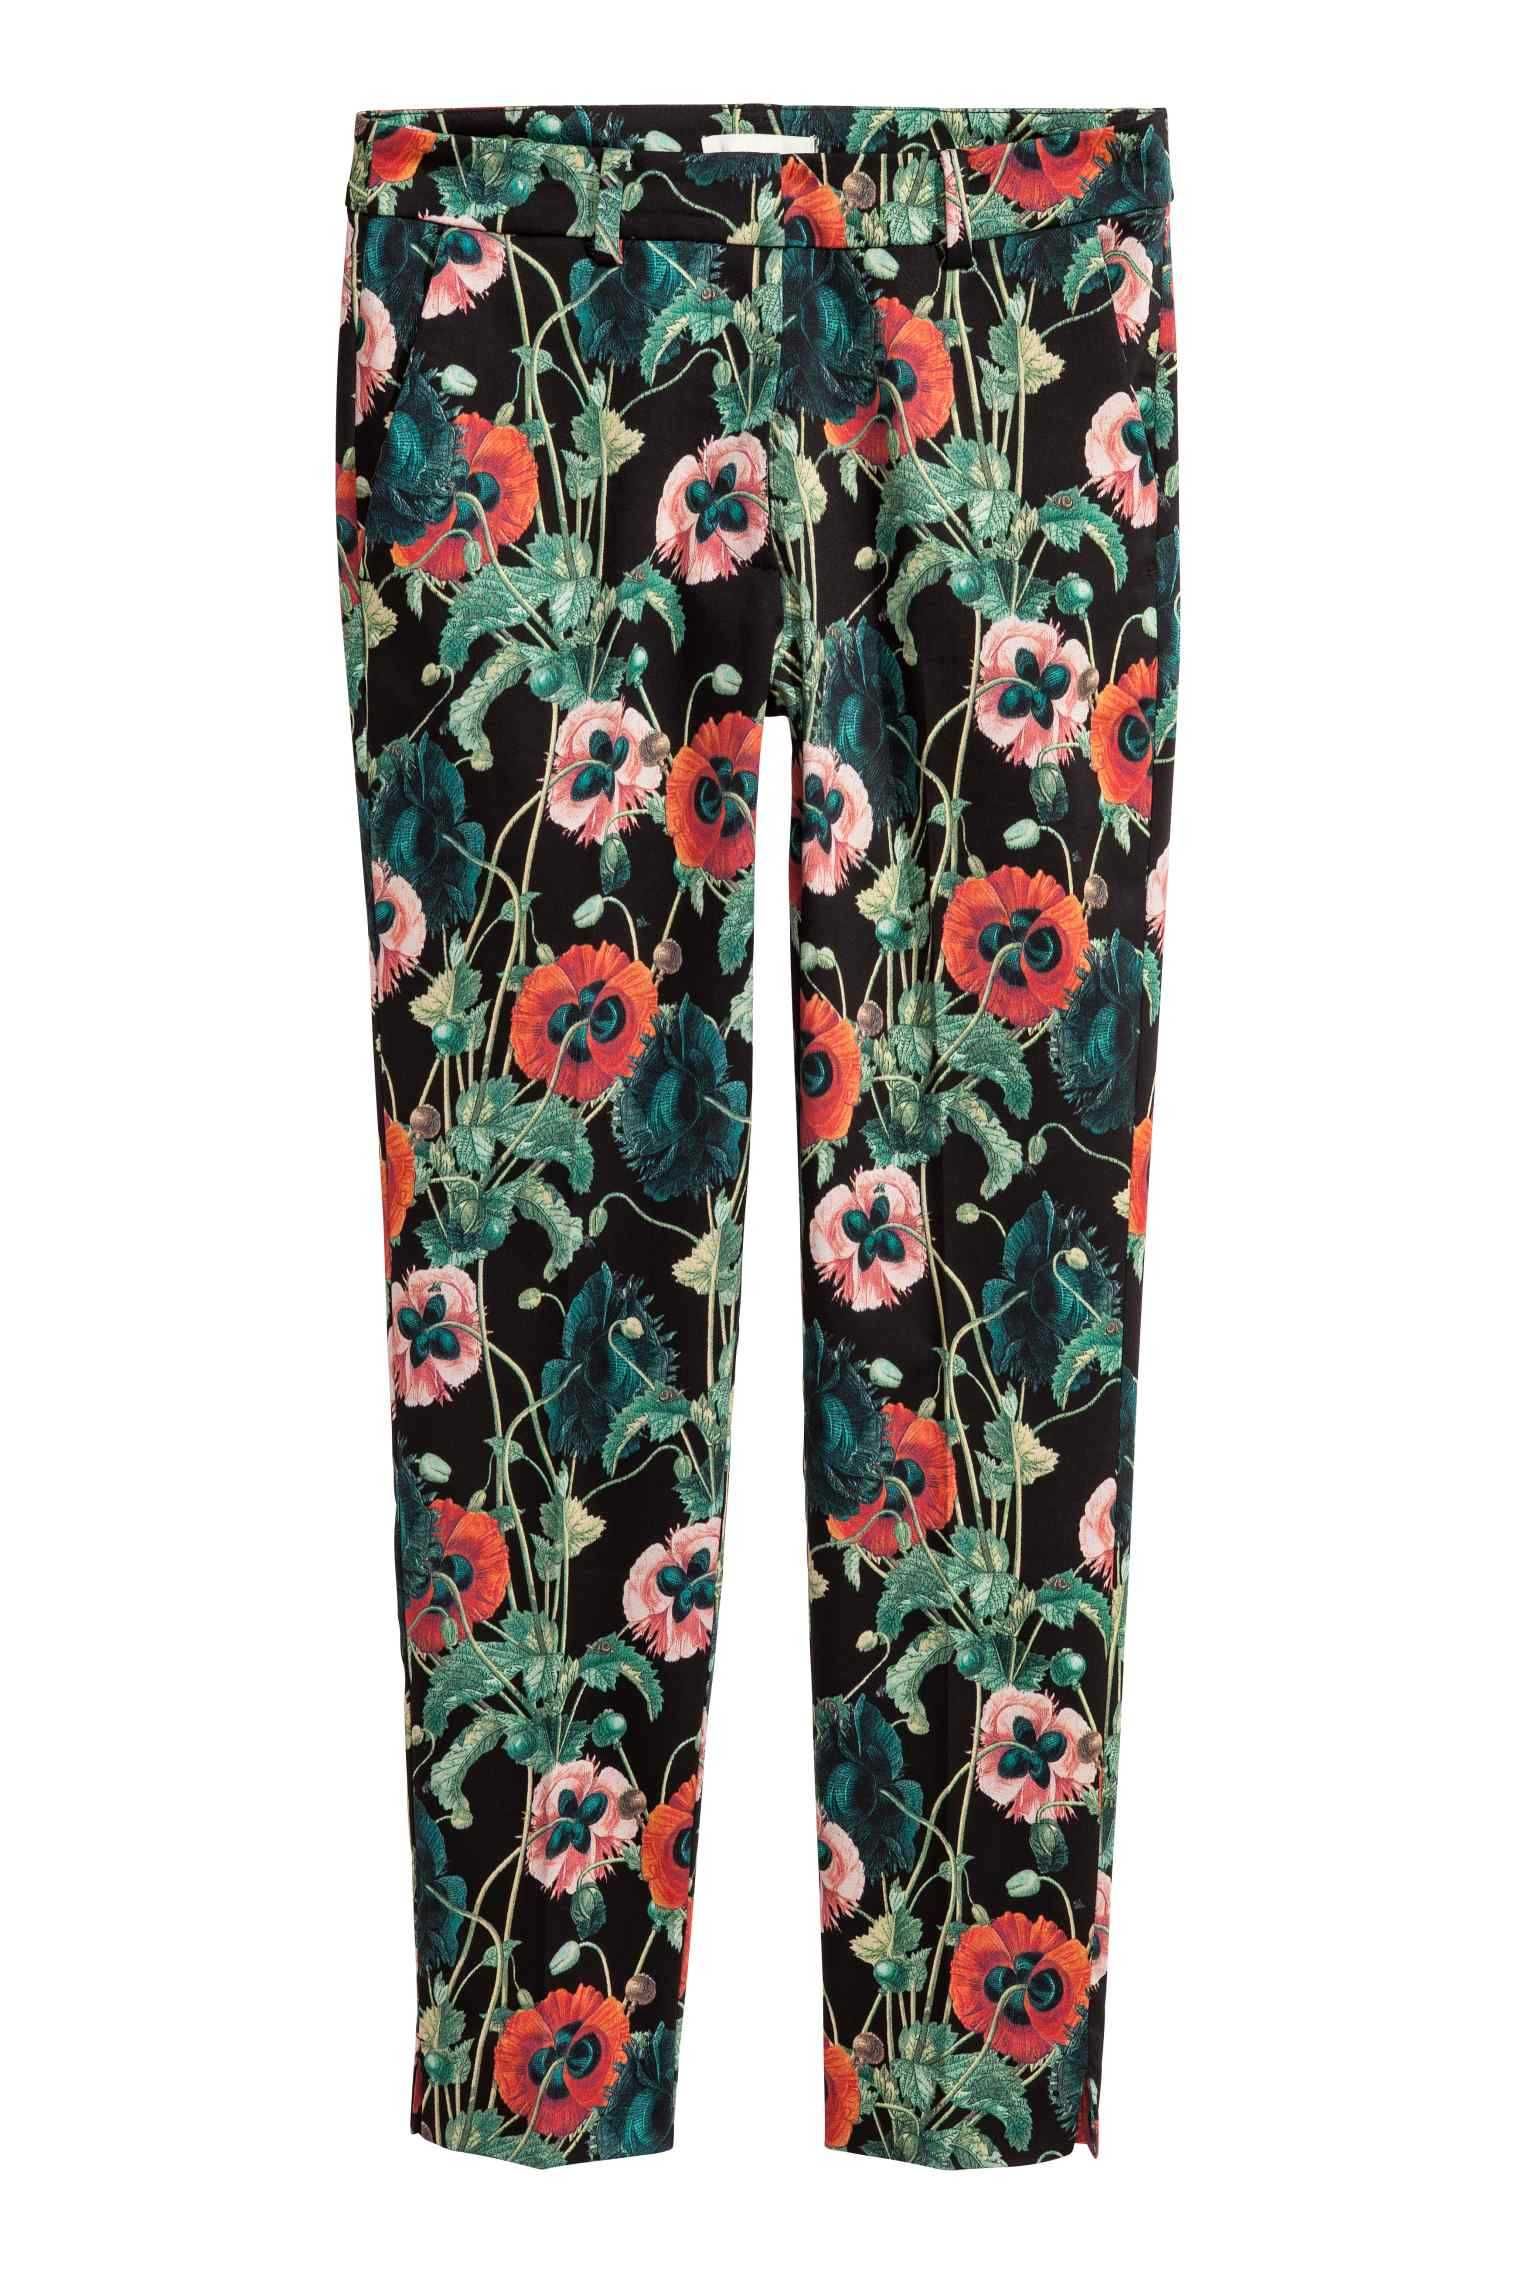 Pantaloni H&M cu print floral, măsura 38